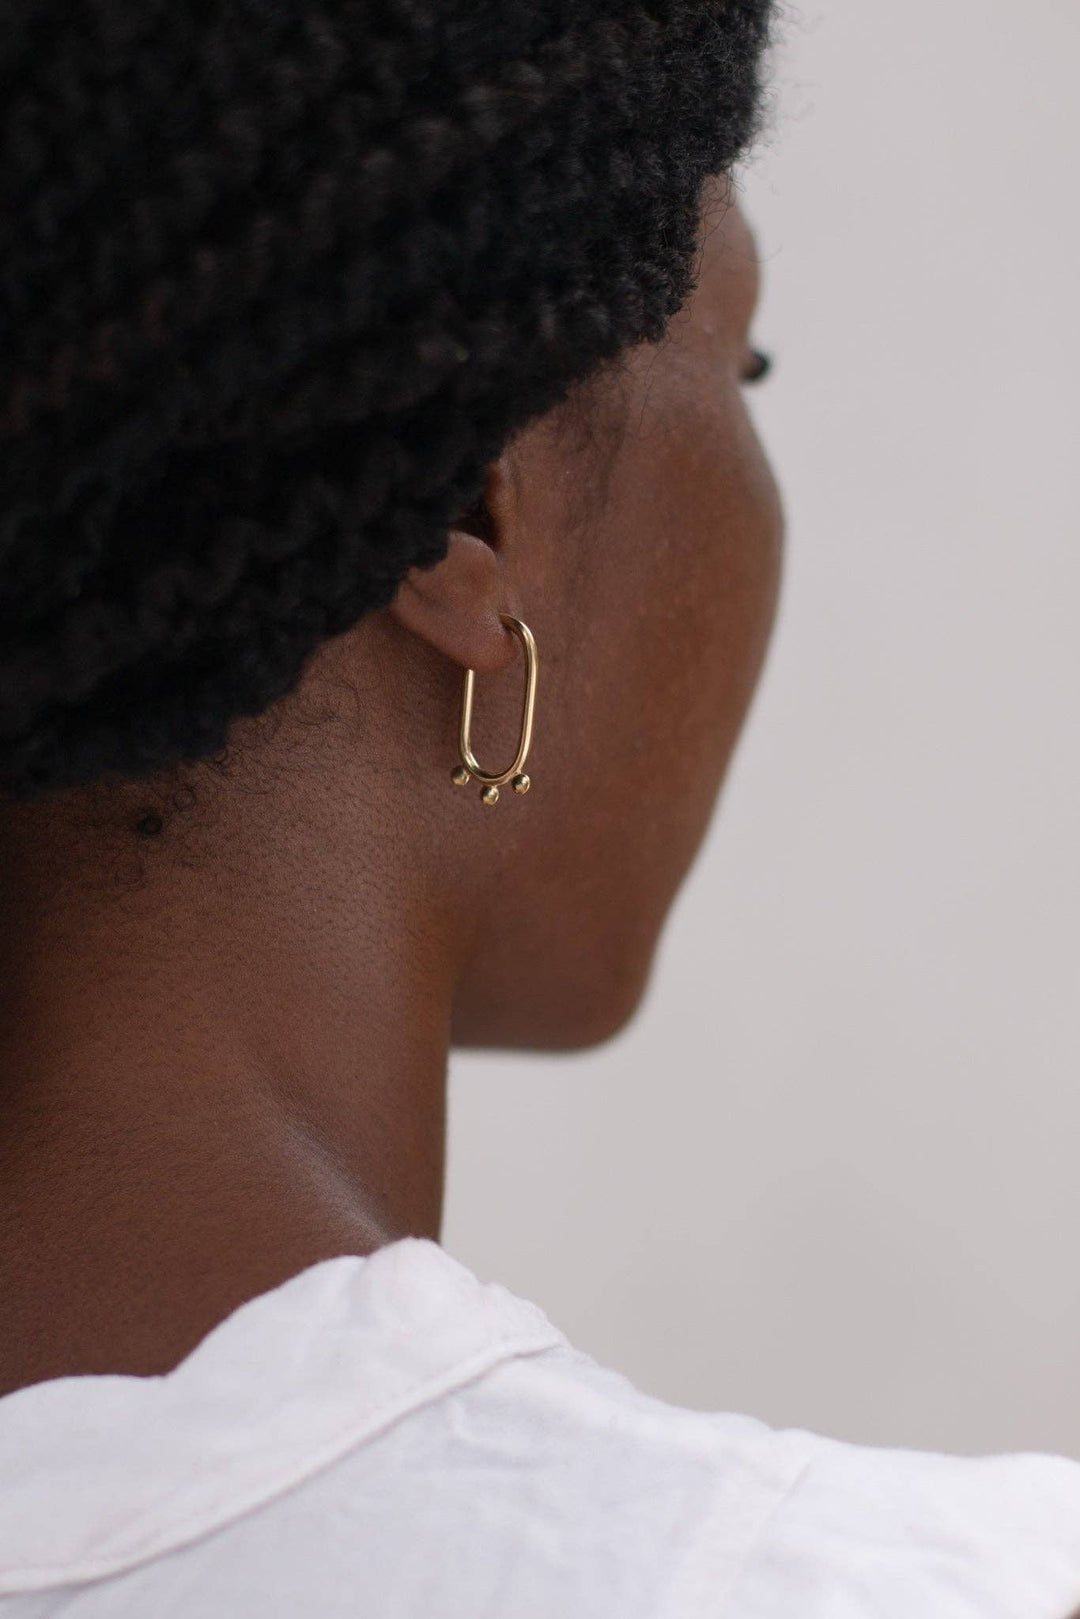 made in malawi fair trade women owned business brass earrings